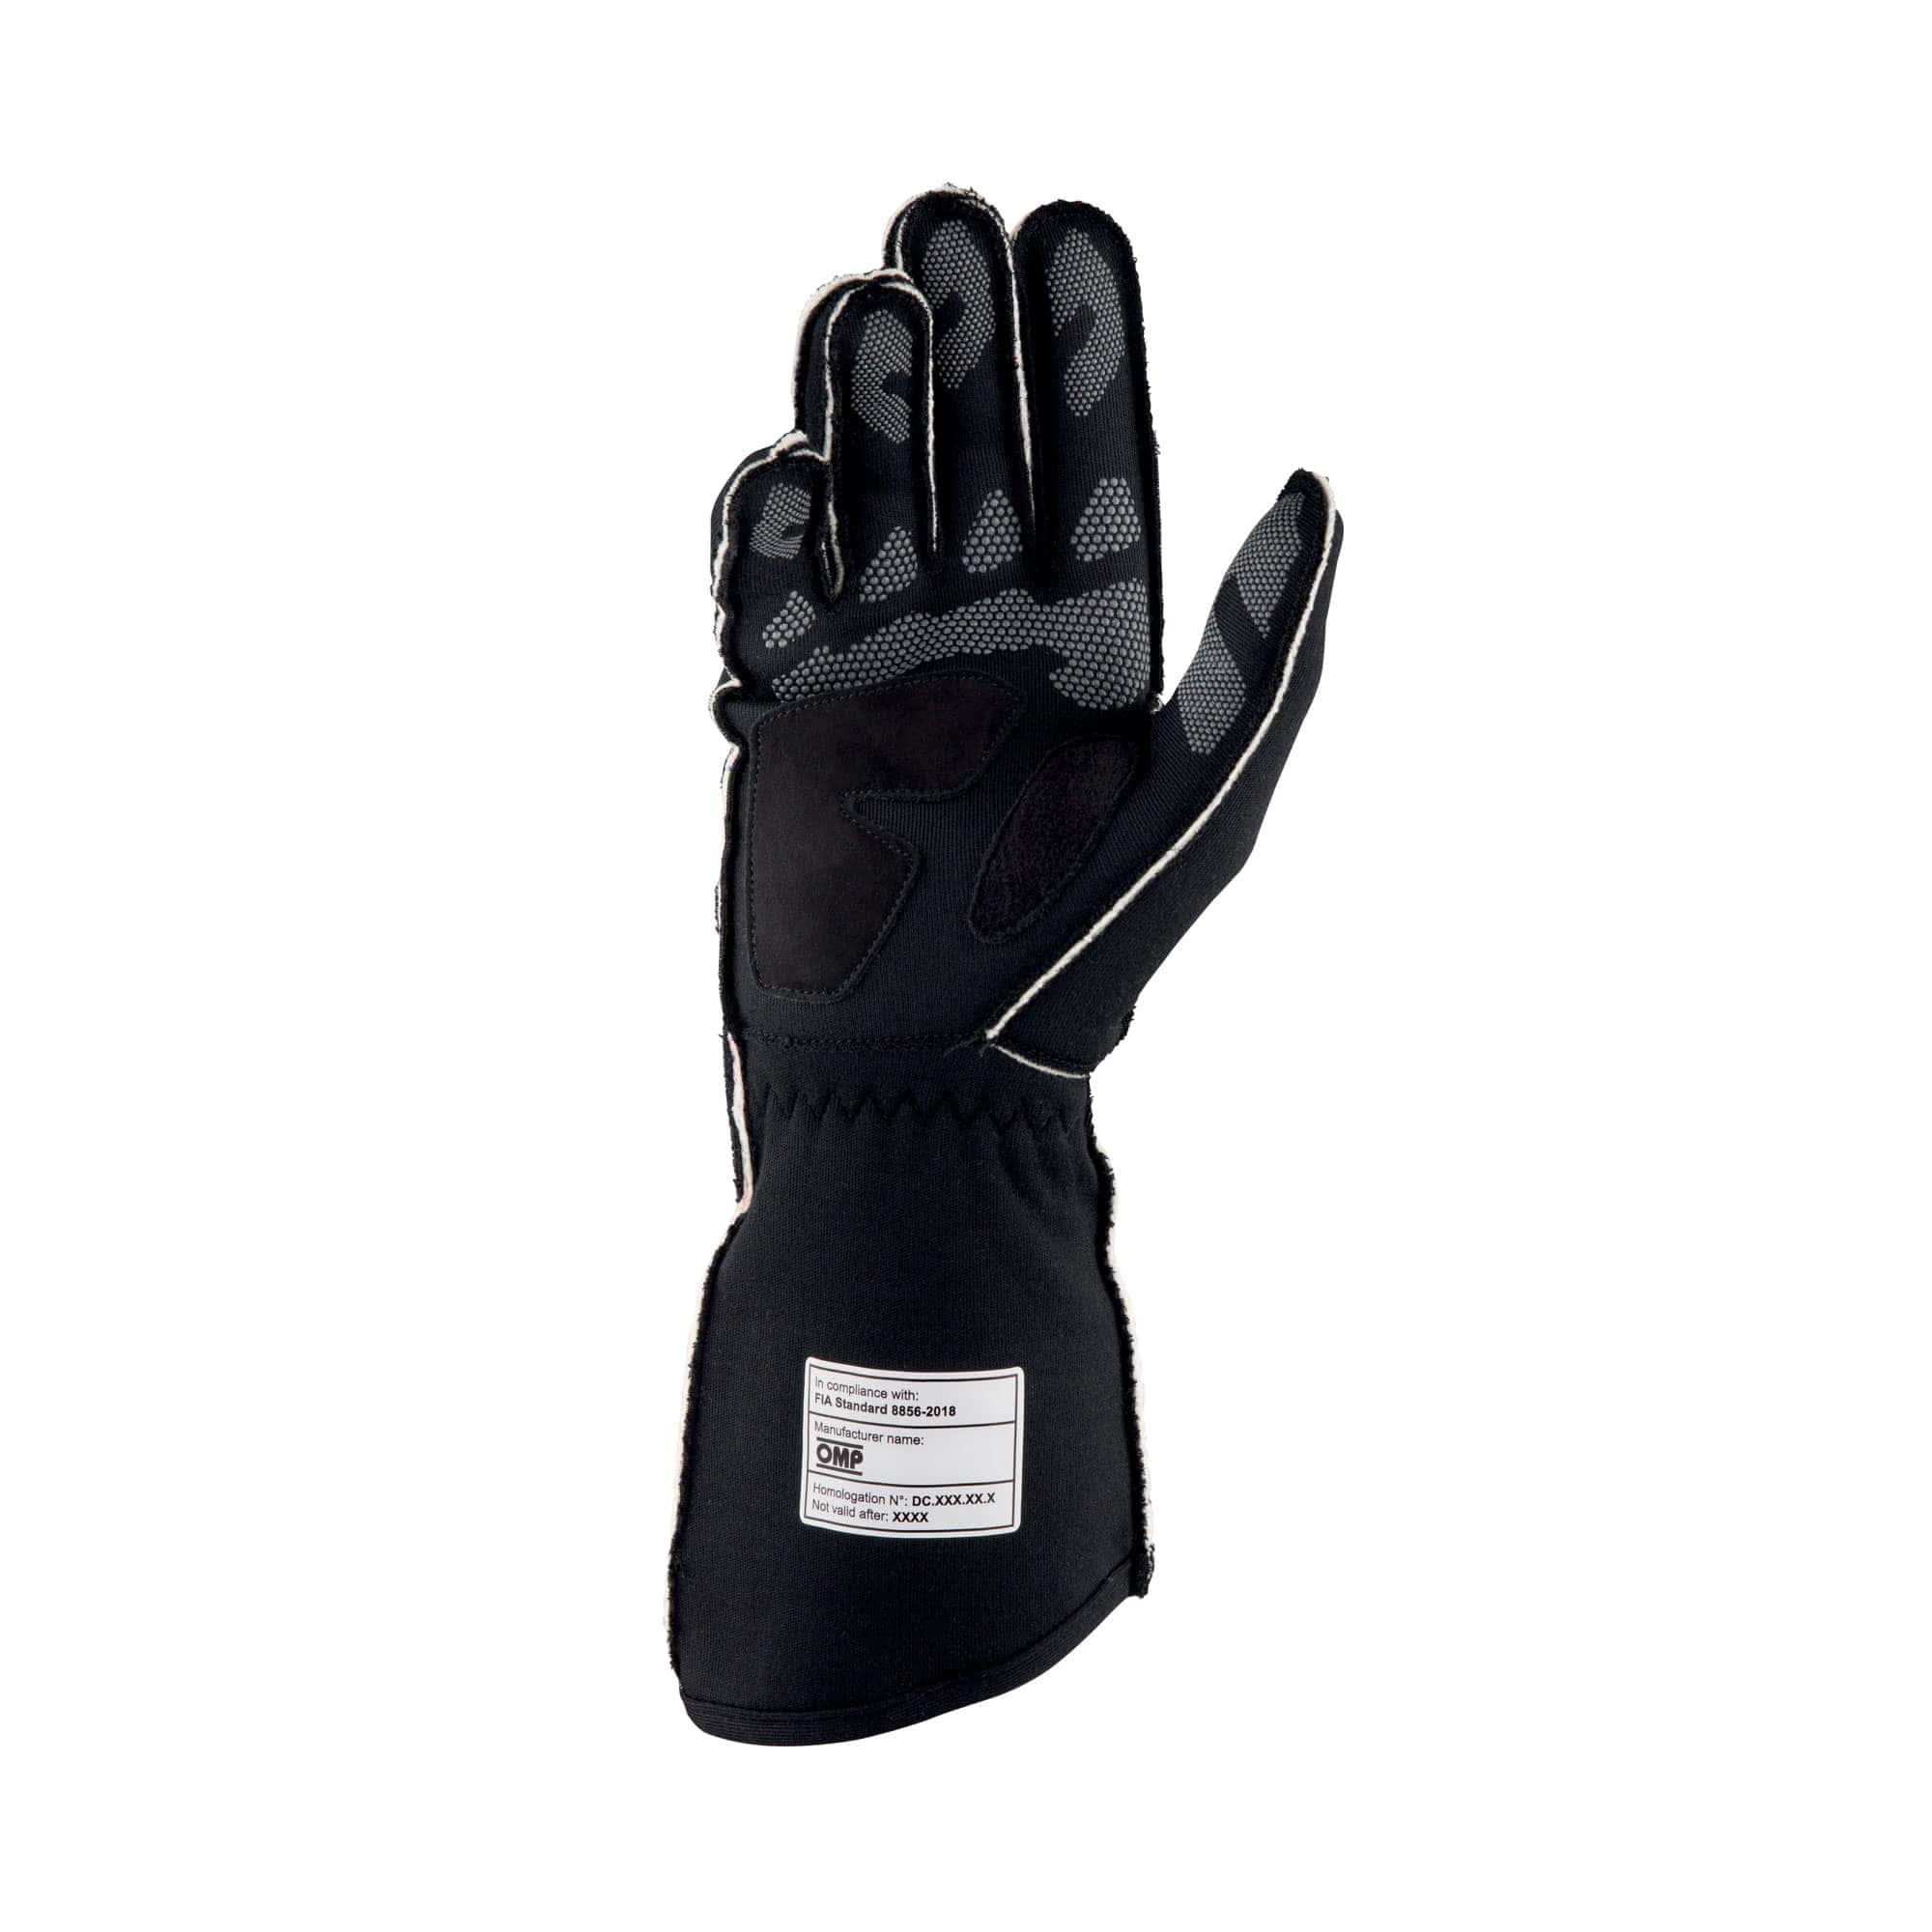 Guanti-Tecnica-Gloves-Omp-Nero-Bianco-IB-772-NW-rear